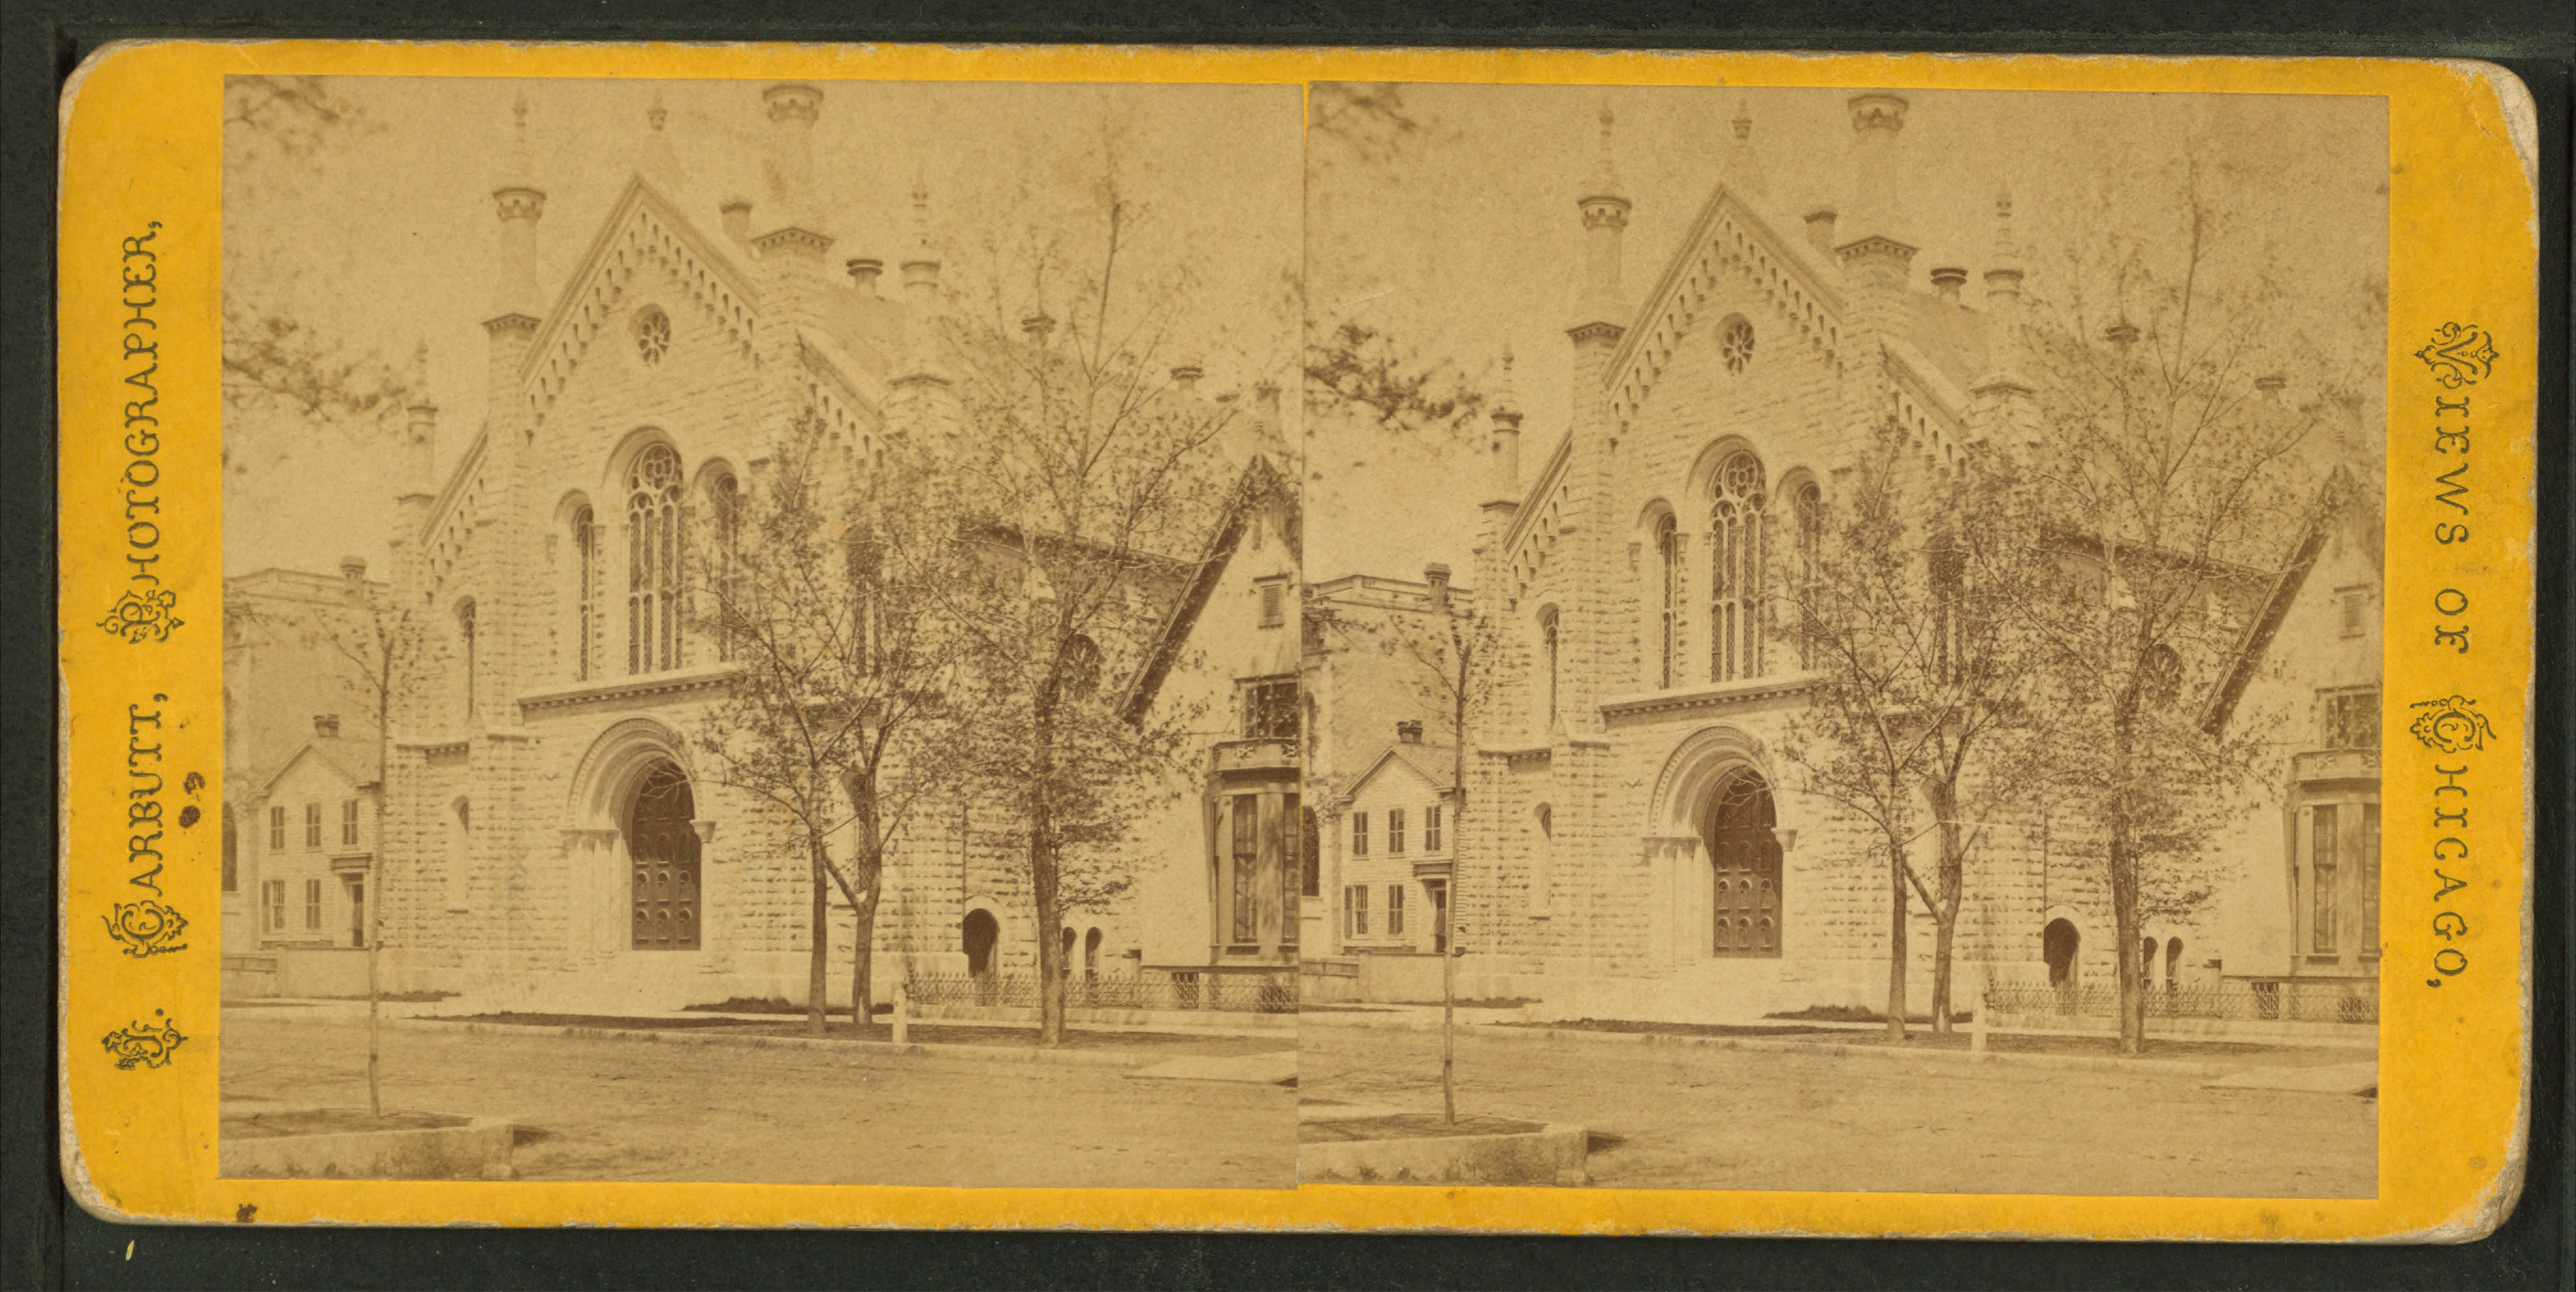 Church of the Messiah, Wabash Avenue, by Carbutt, John, 1832-1905